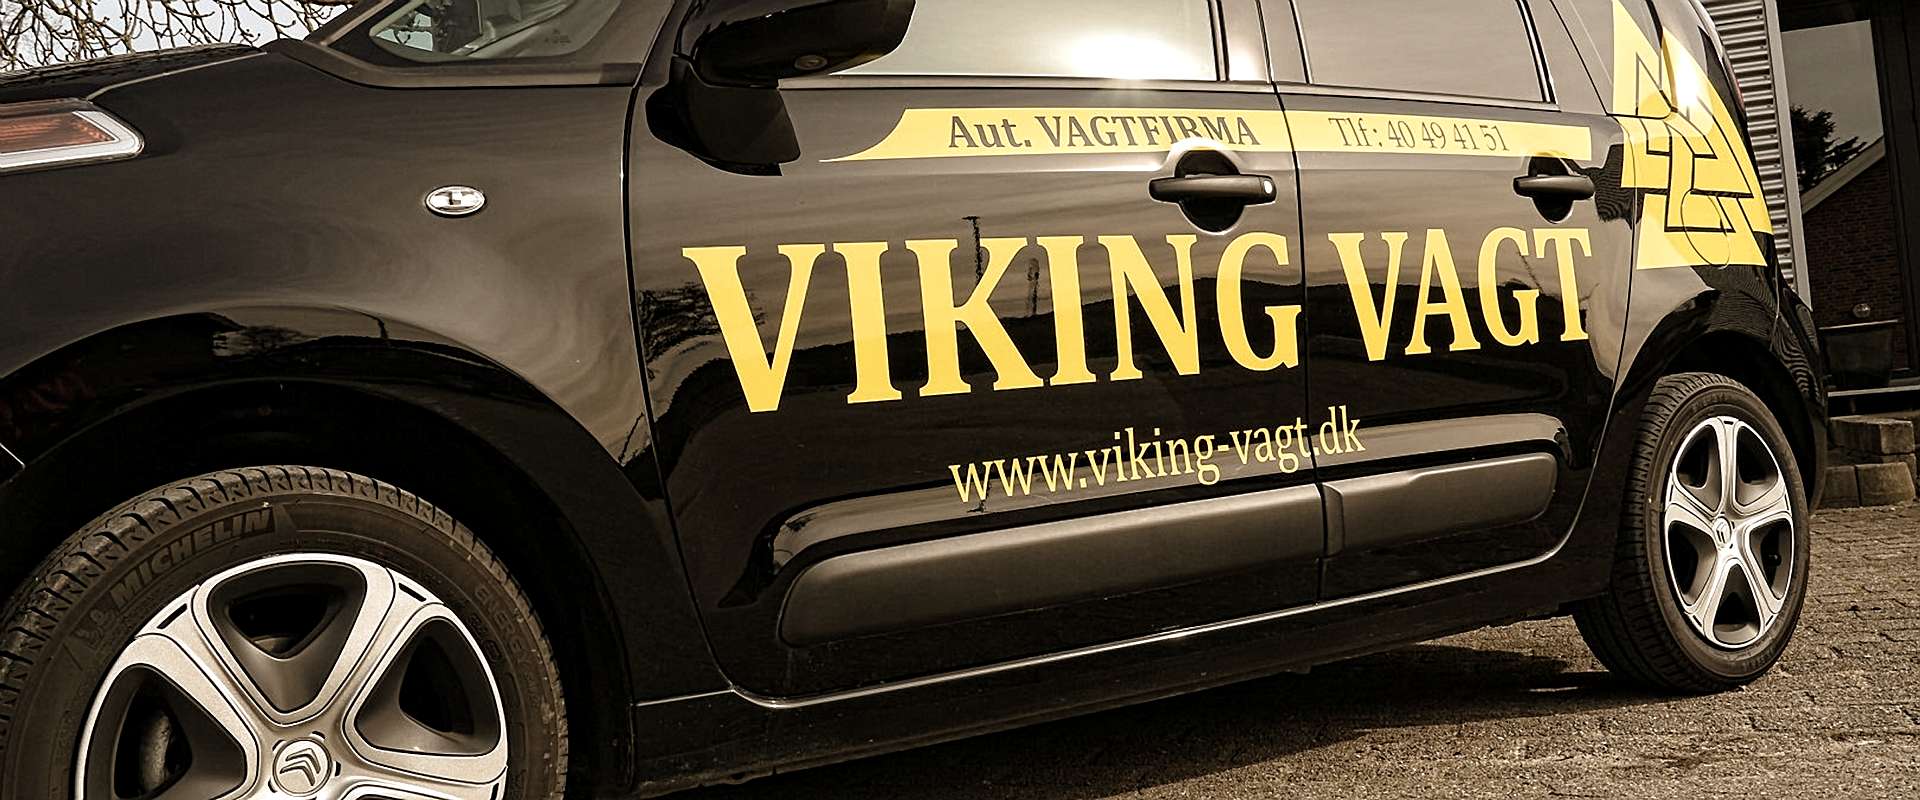 Viking-vagt-firma-23 copy.jpg